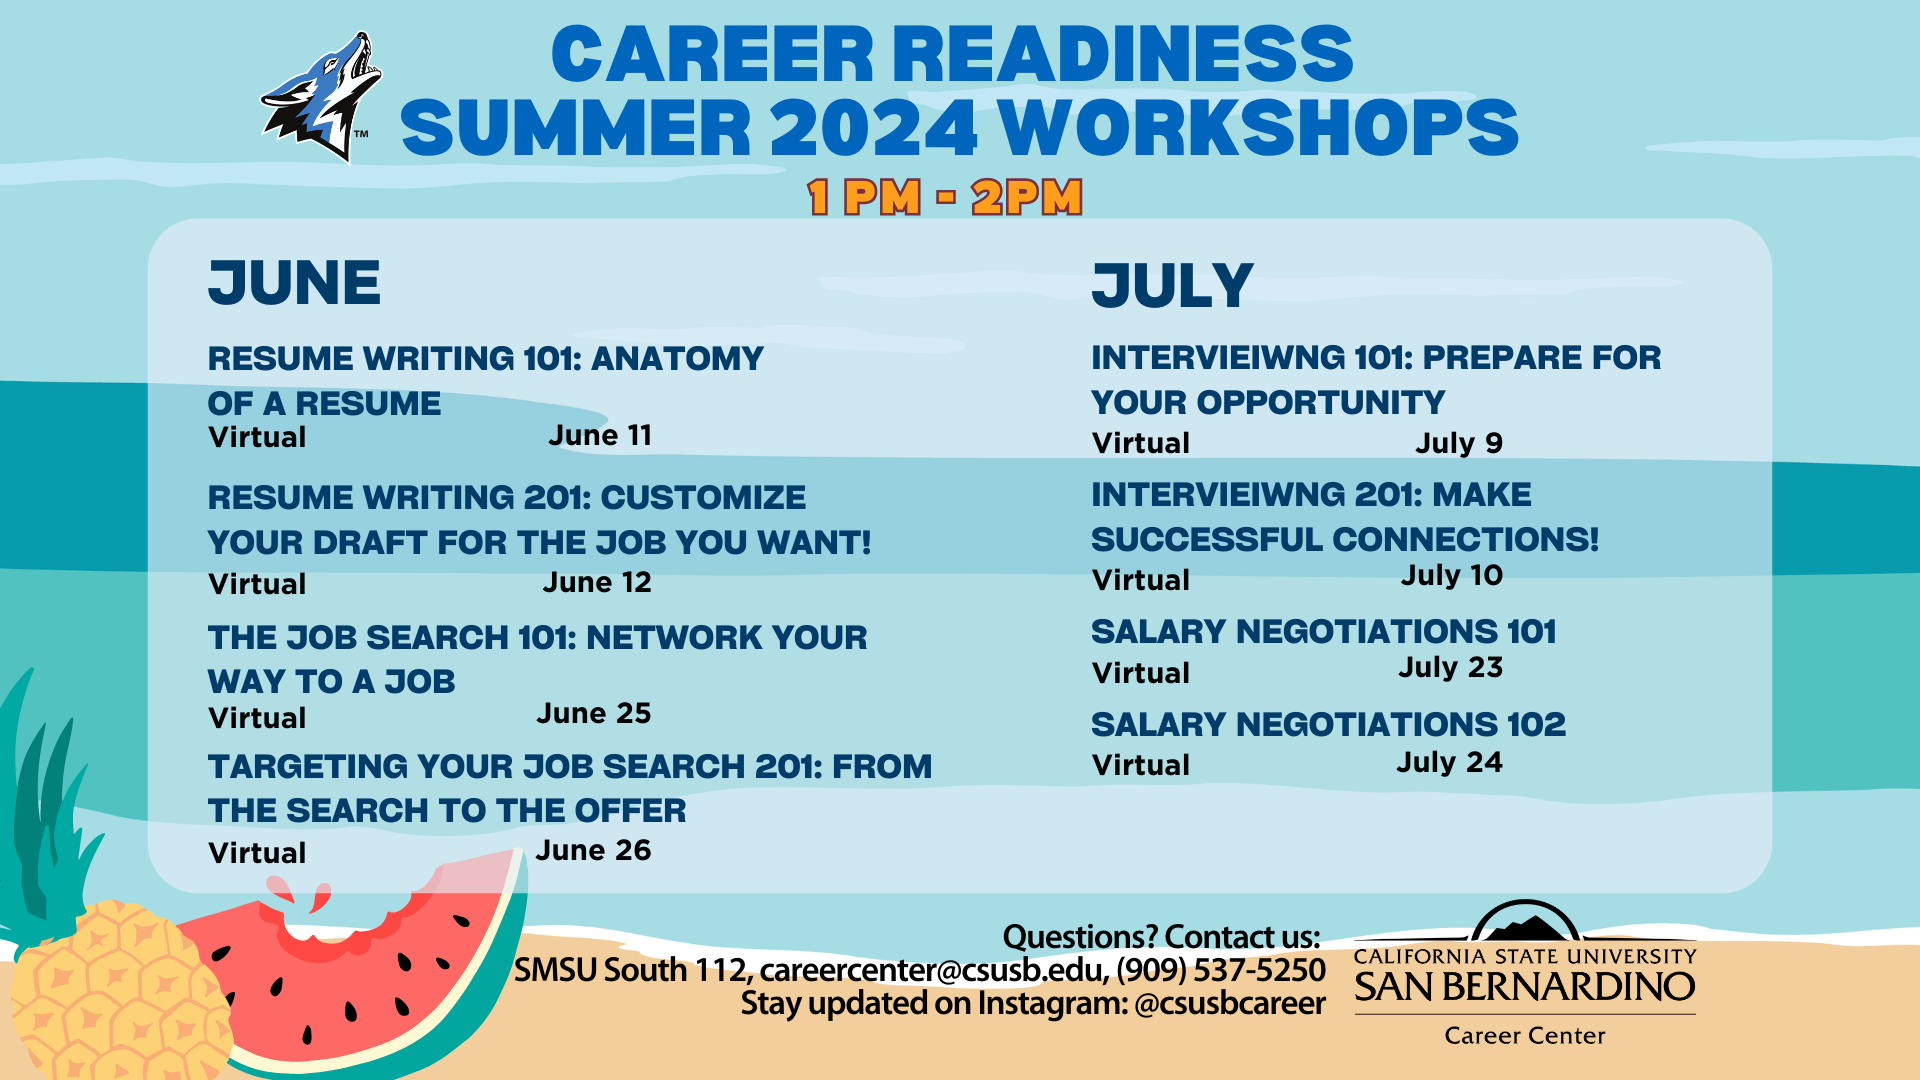 Summer 2024 Career Readiness Series workshop schedule